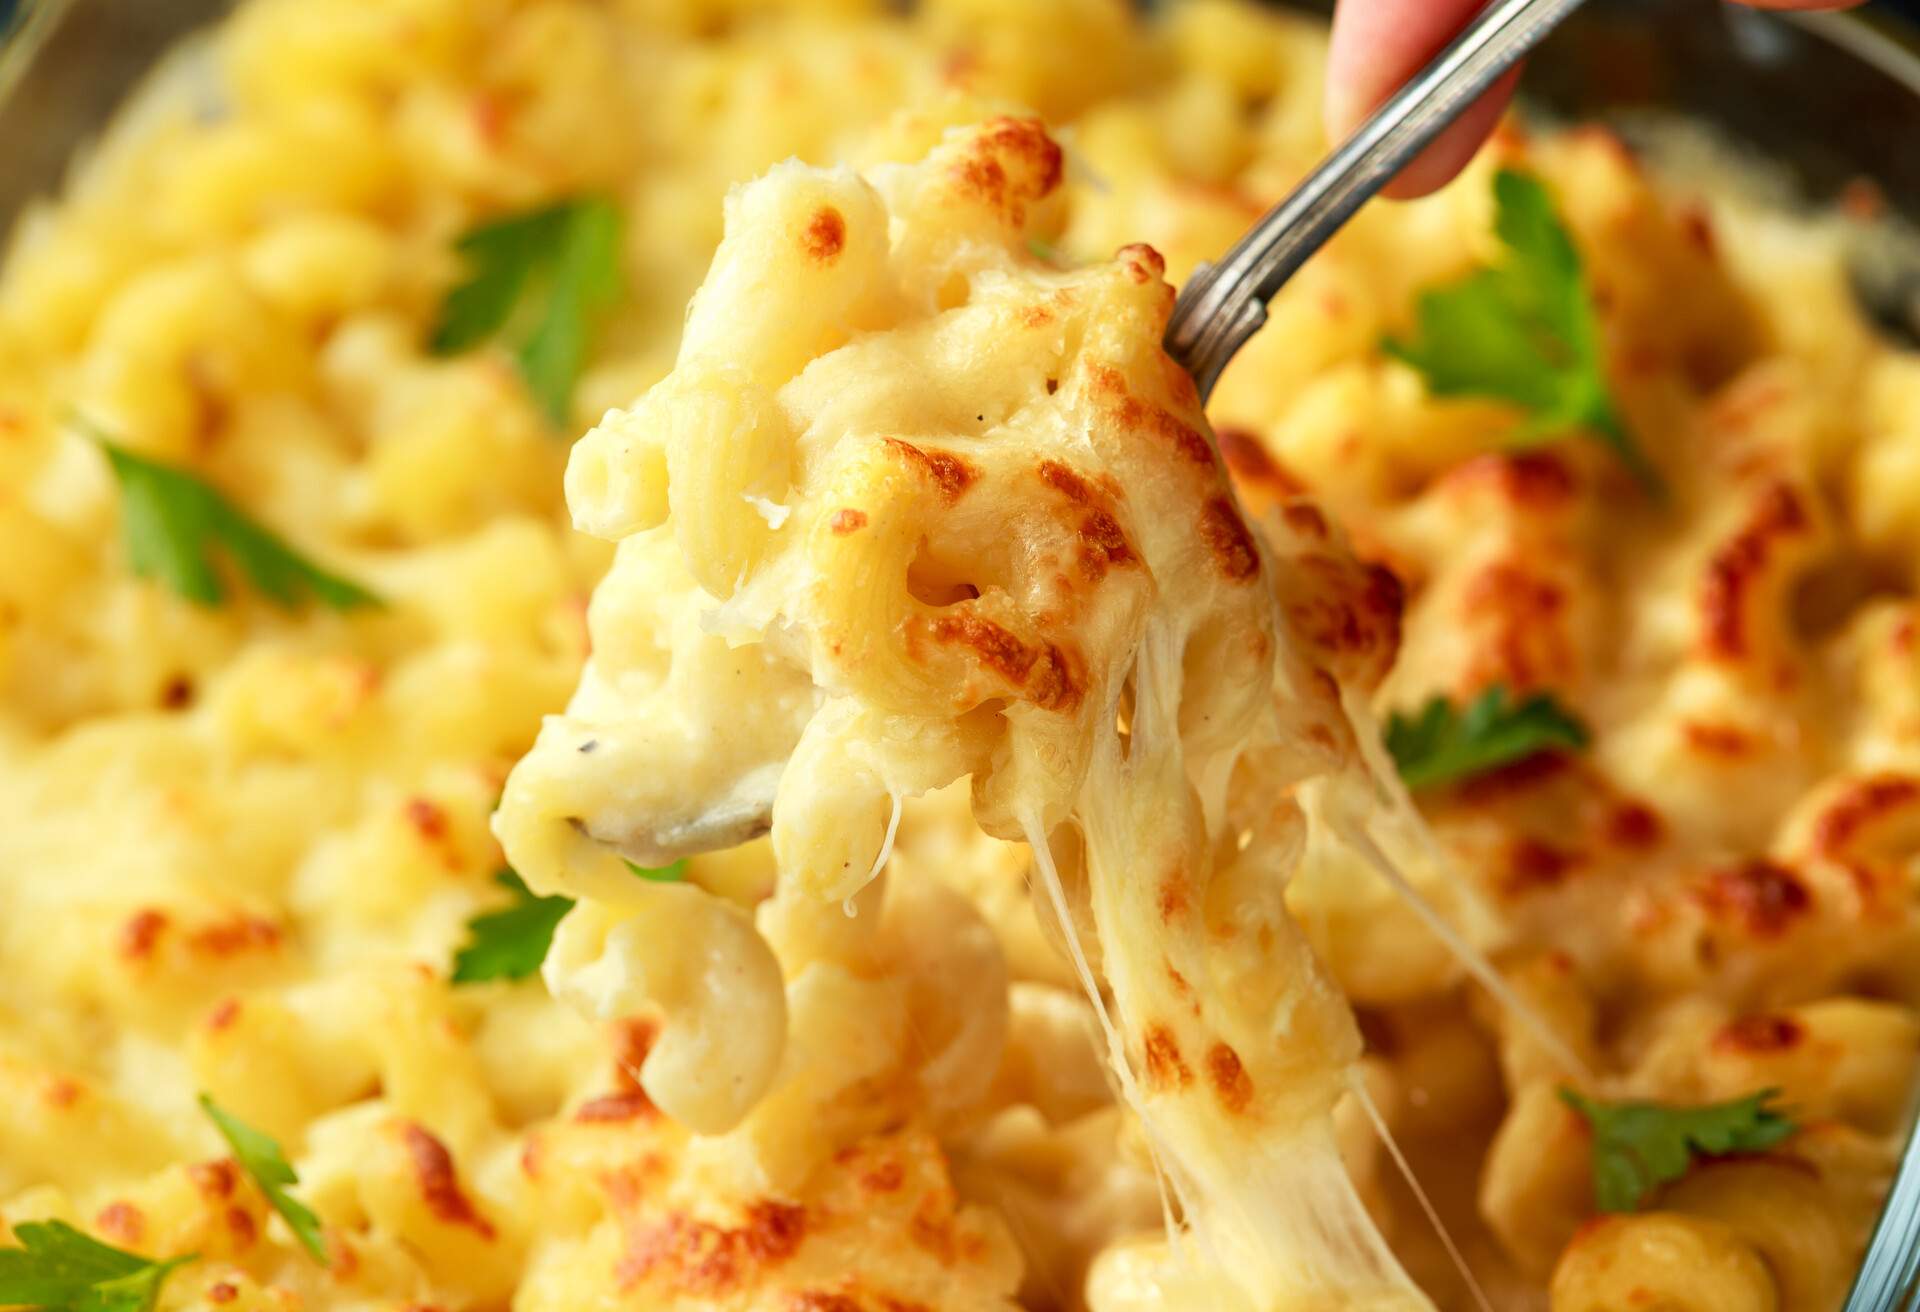 macaroni pasta and cheese bake with creamy bechamel sauce.